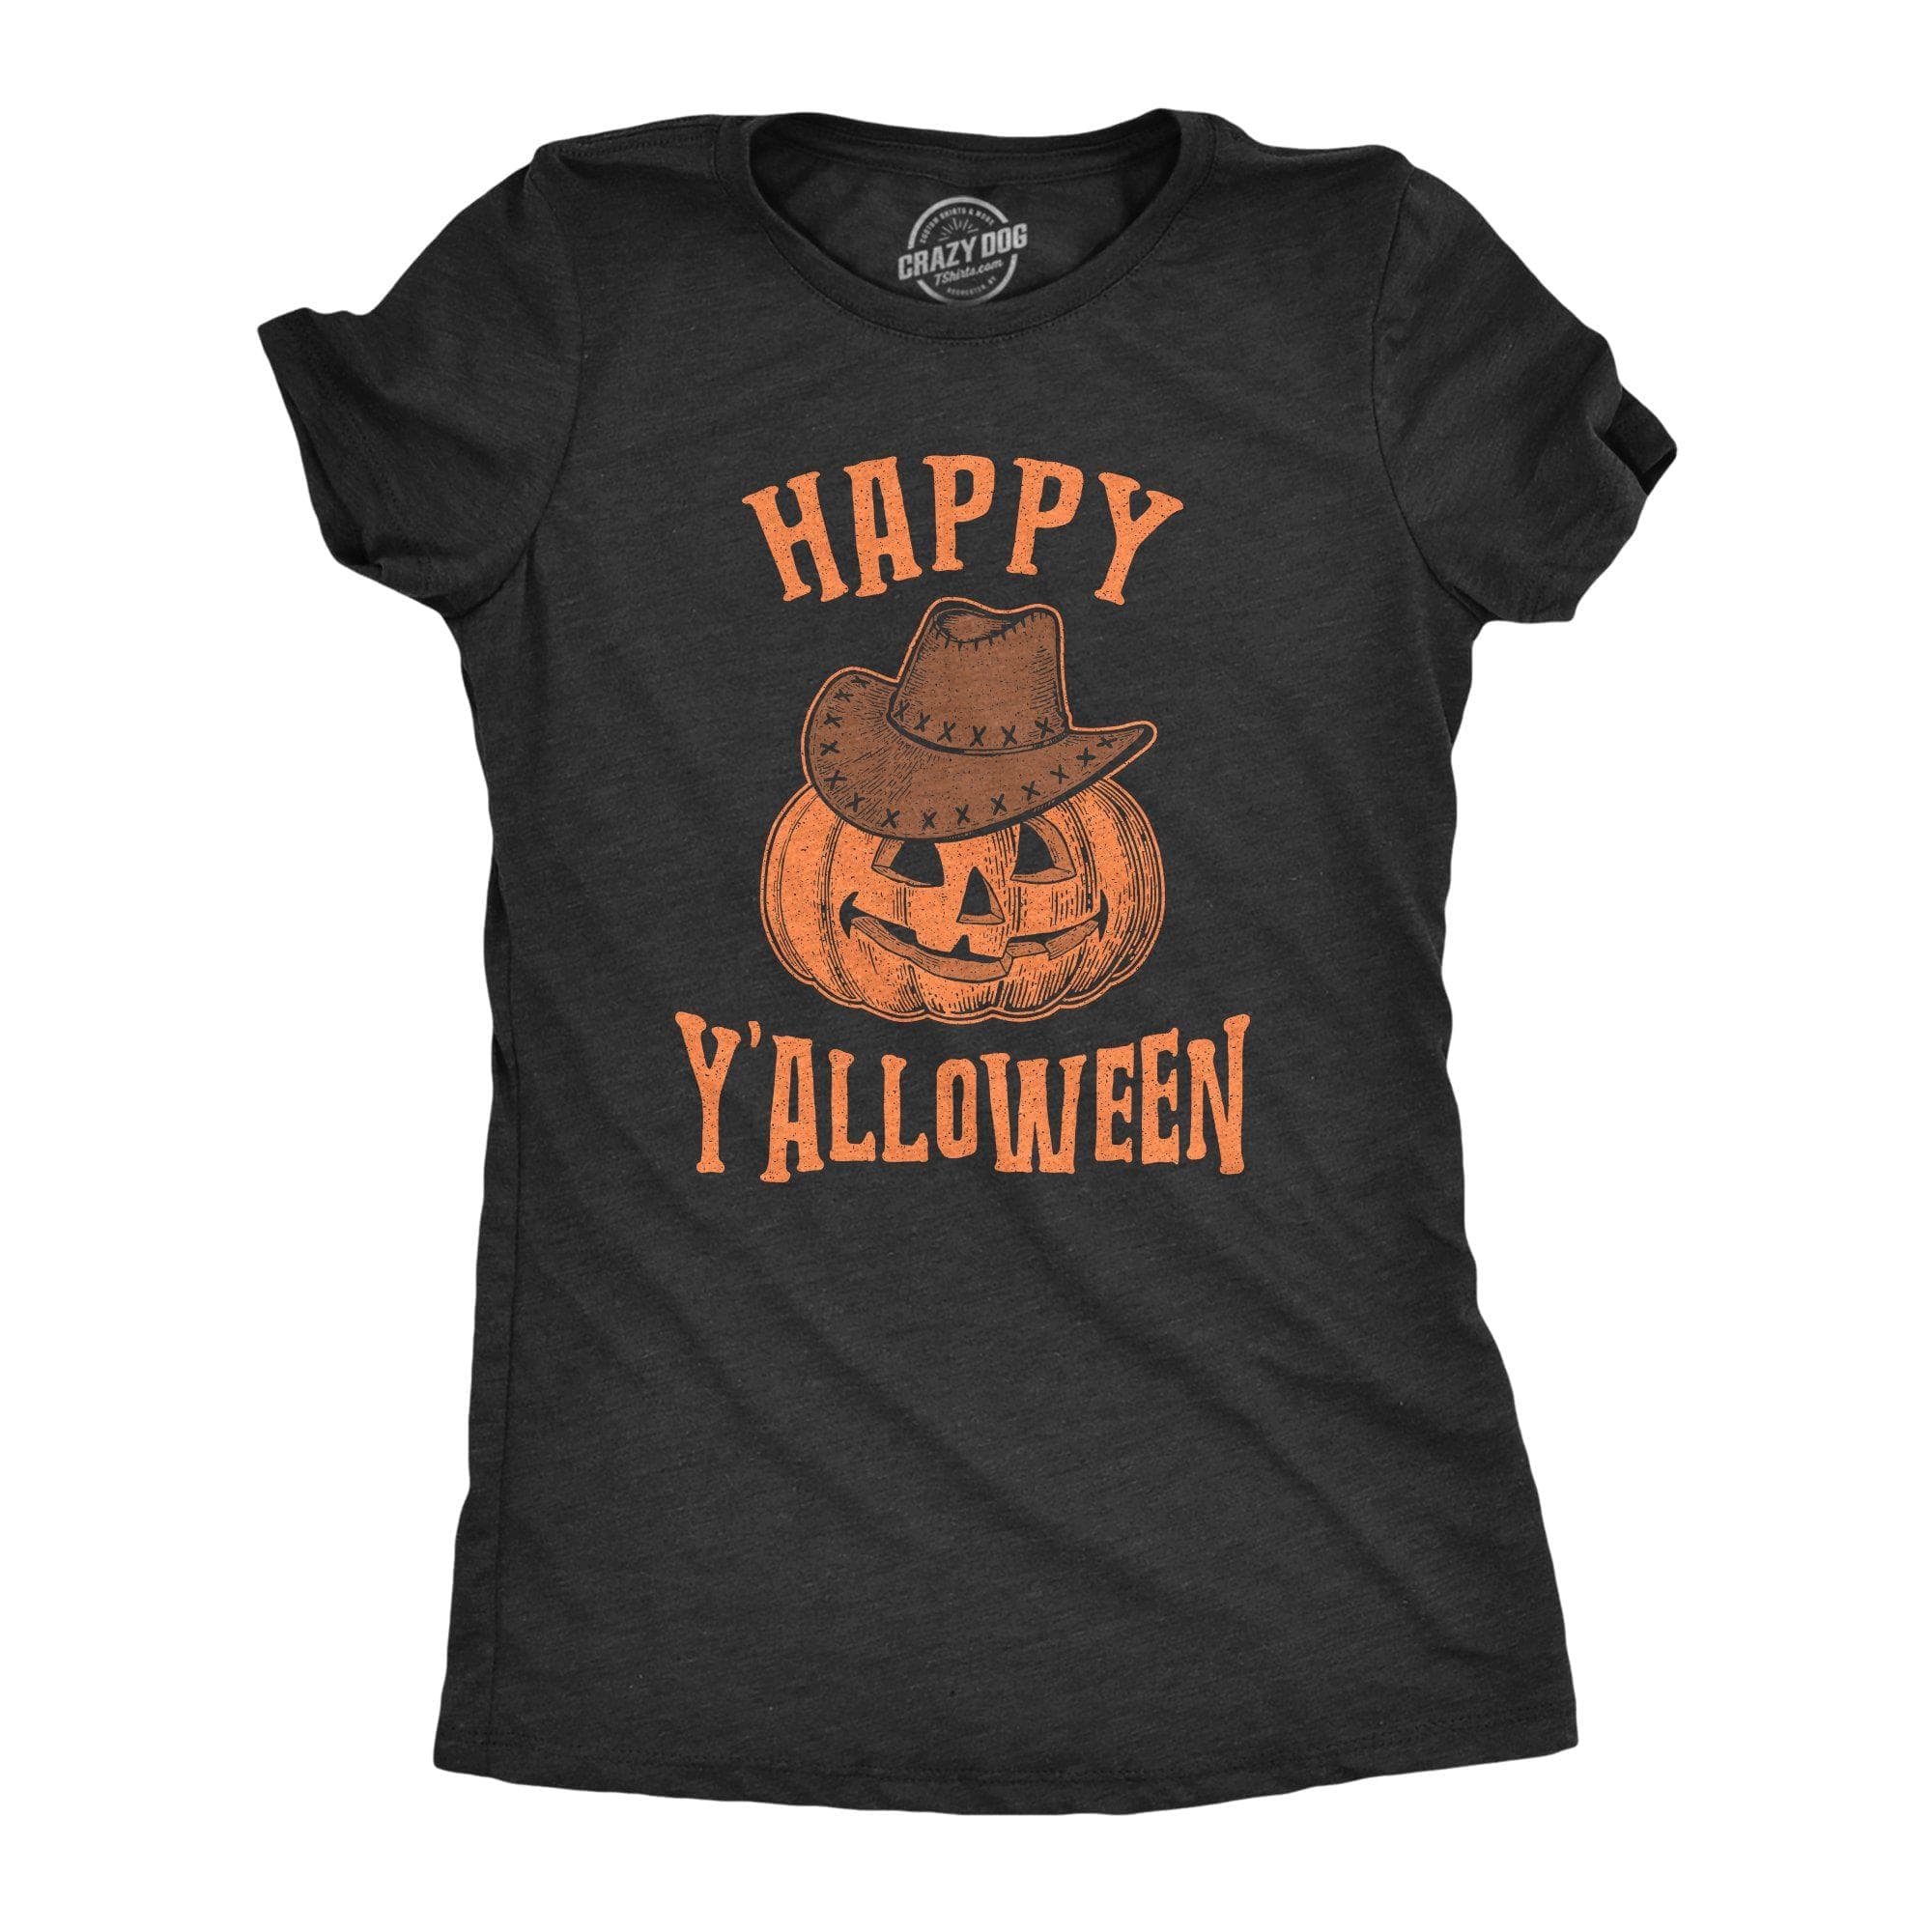 Happy Y'alloween Women's Tshirt - Crazy Dog T-Shirts